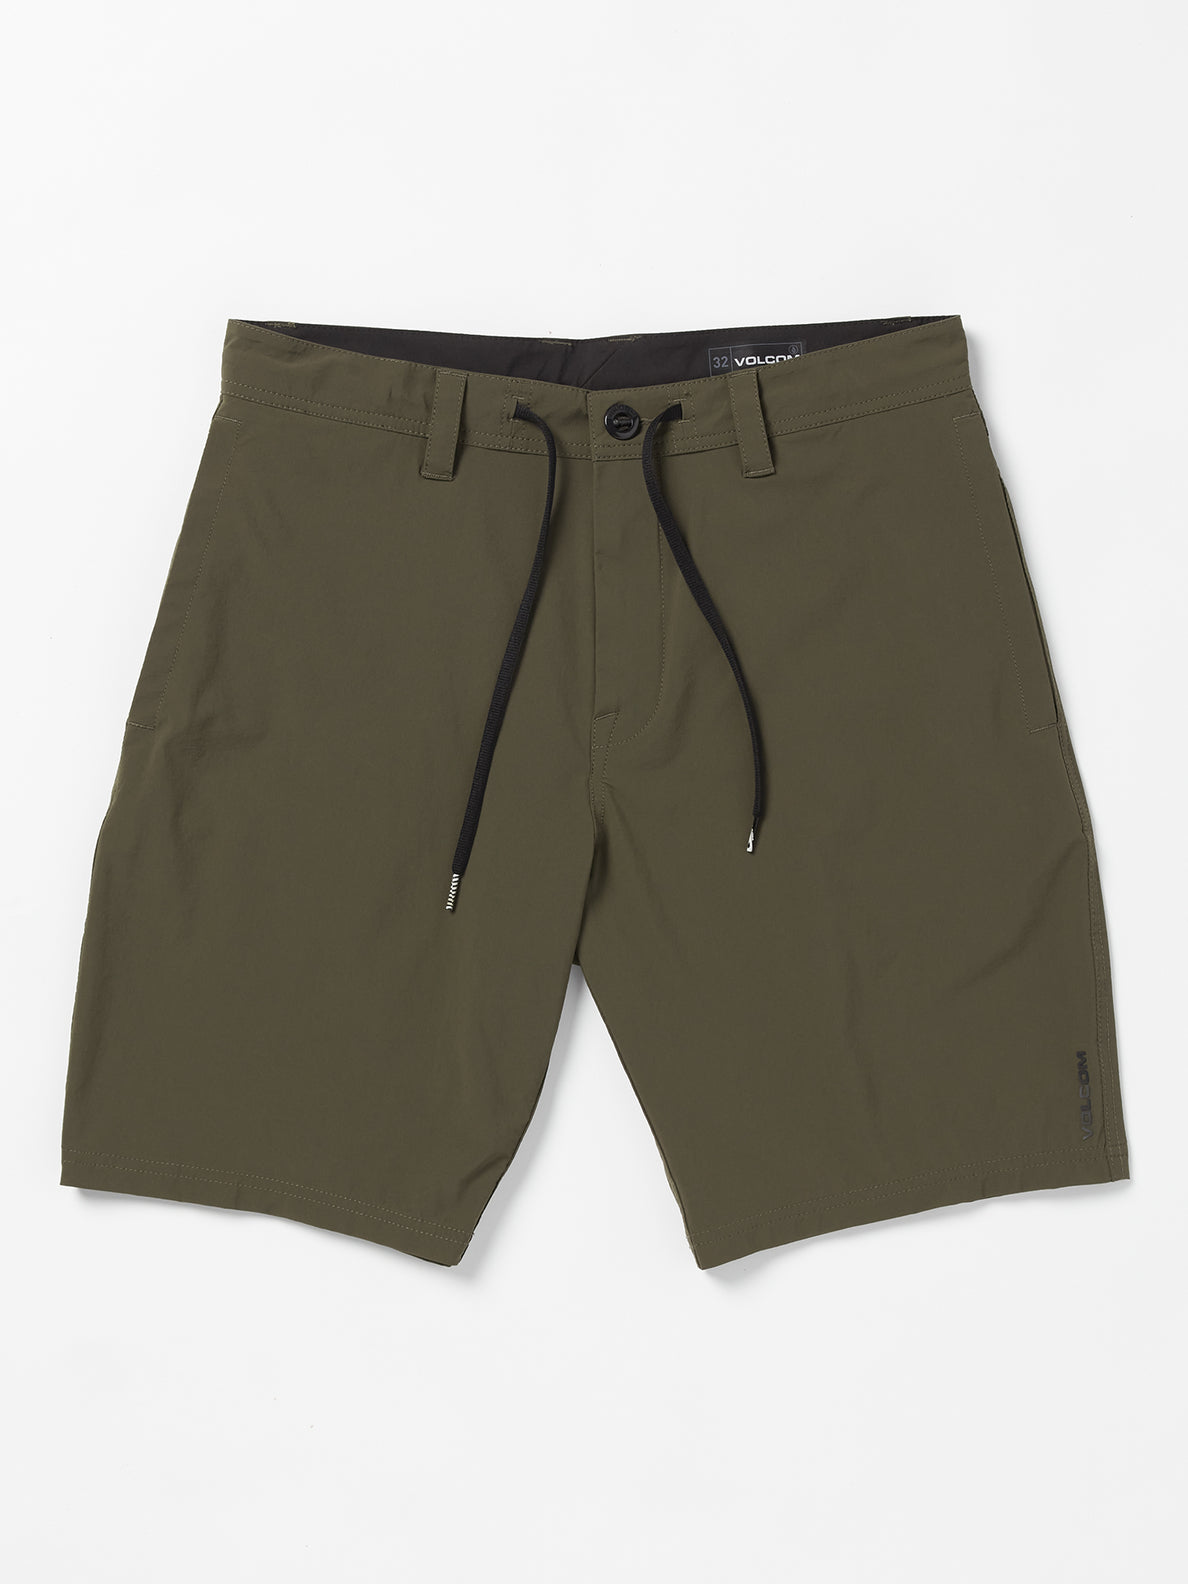 Voltripper Hybrid Shorts - Wren – Volcom US